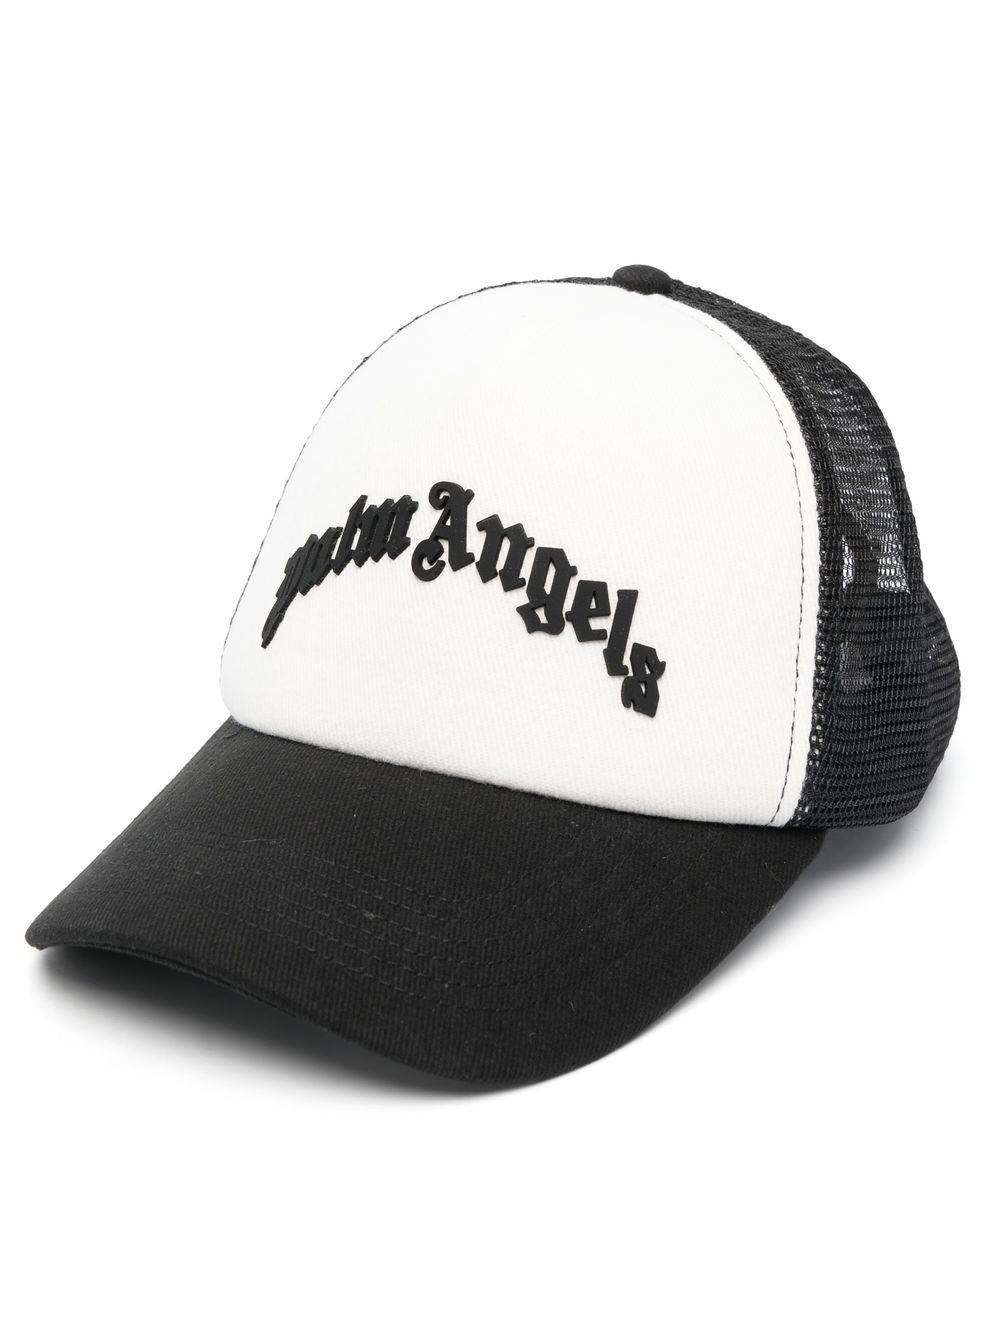 Black/white logo print cap